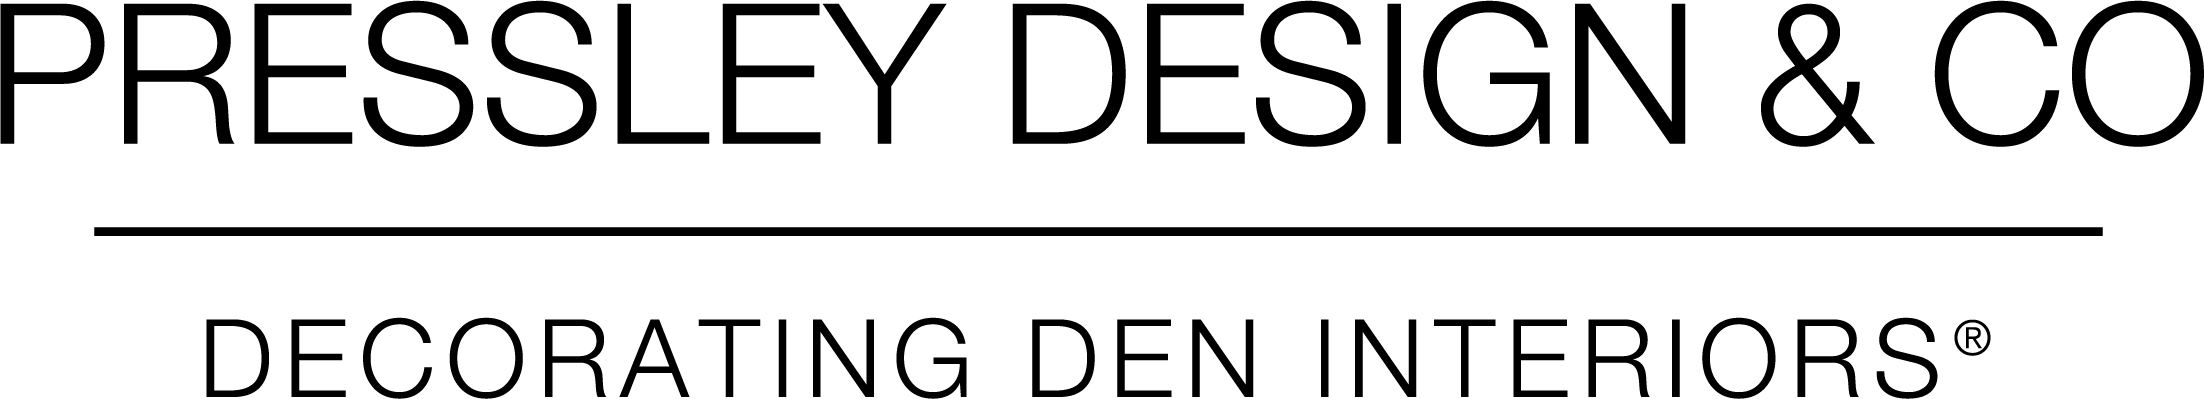 Pressley Design & Co. Interior design firm 817-249-5779